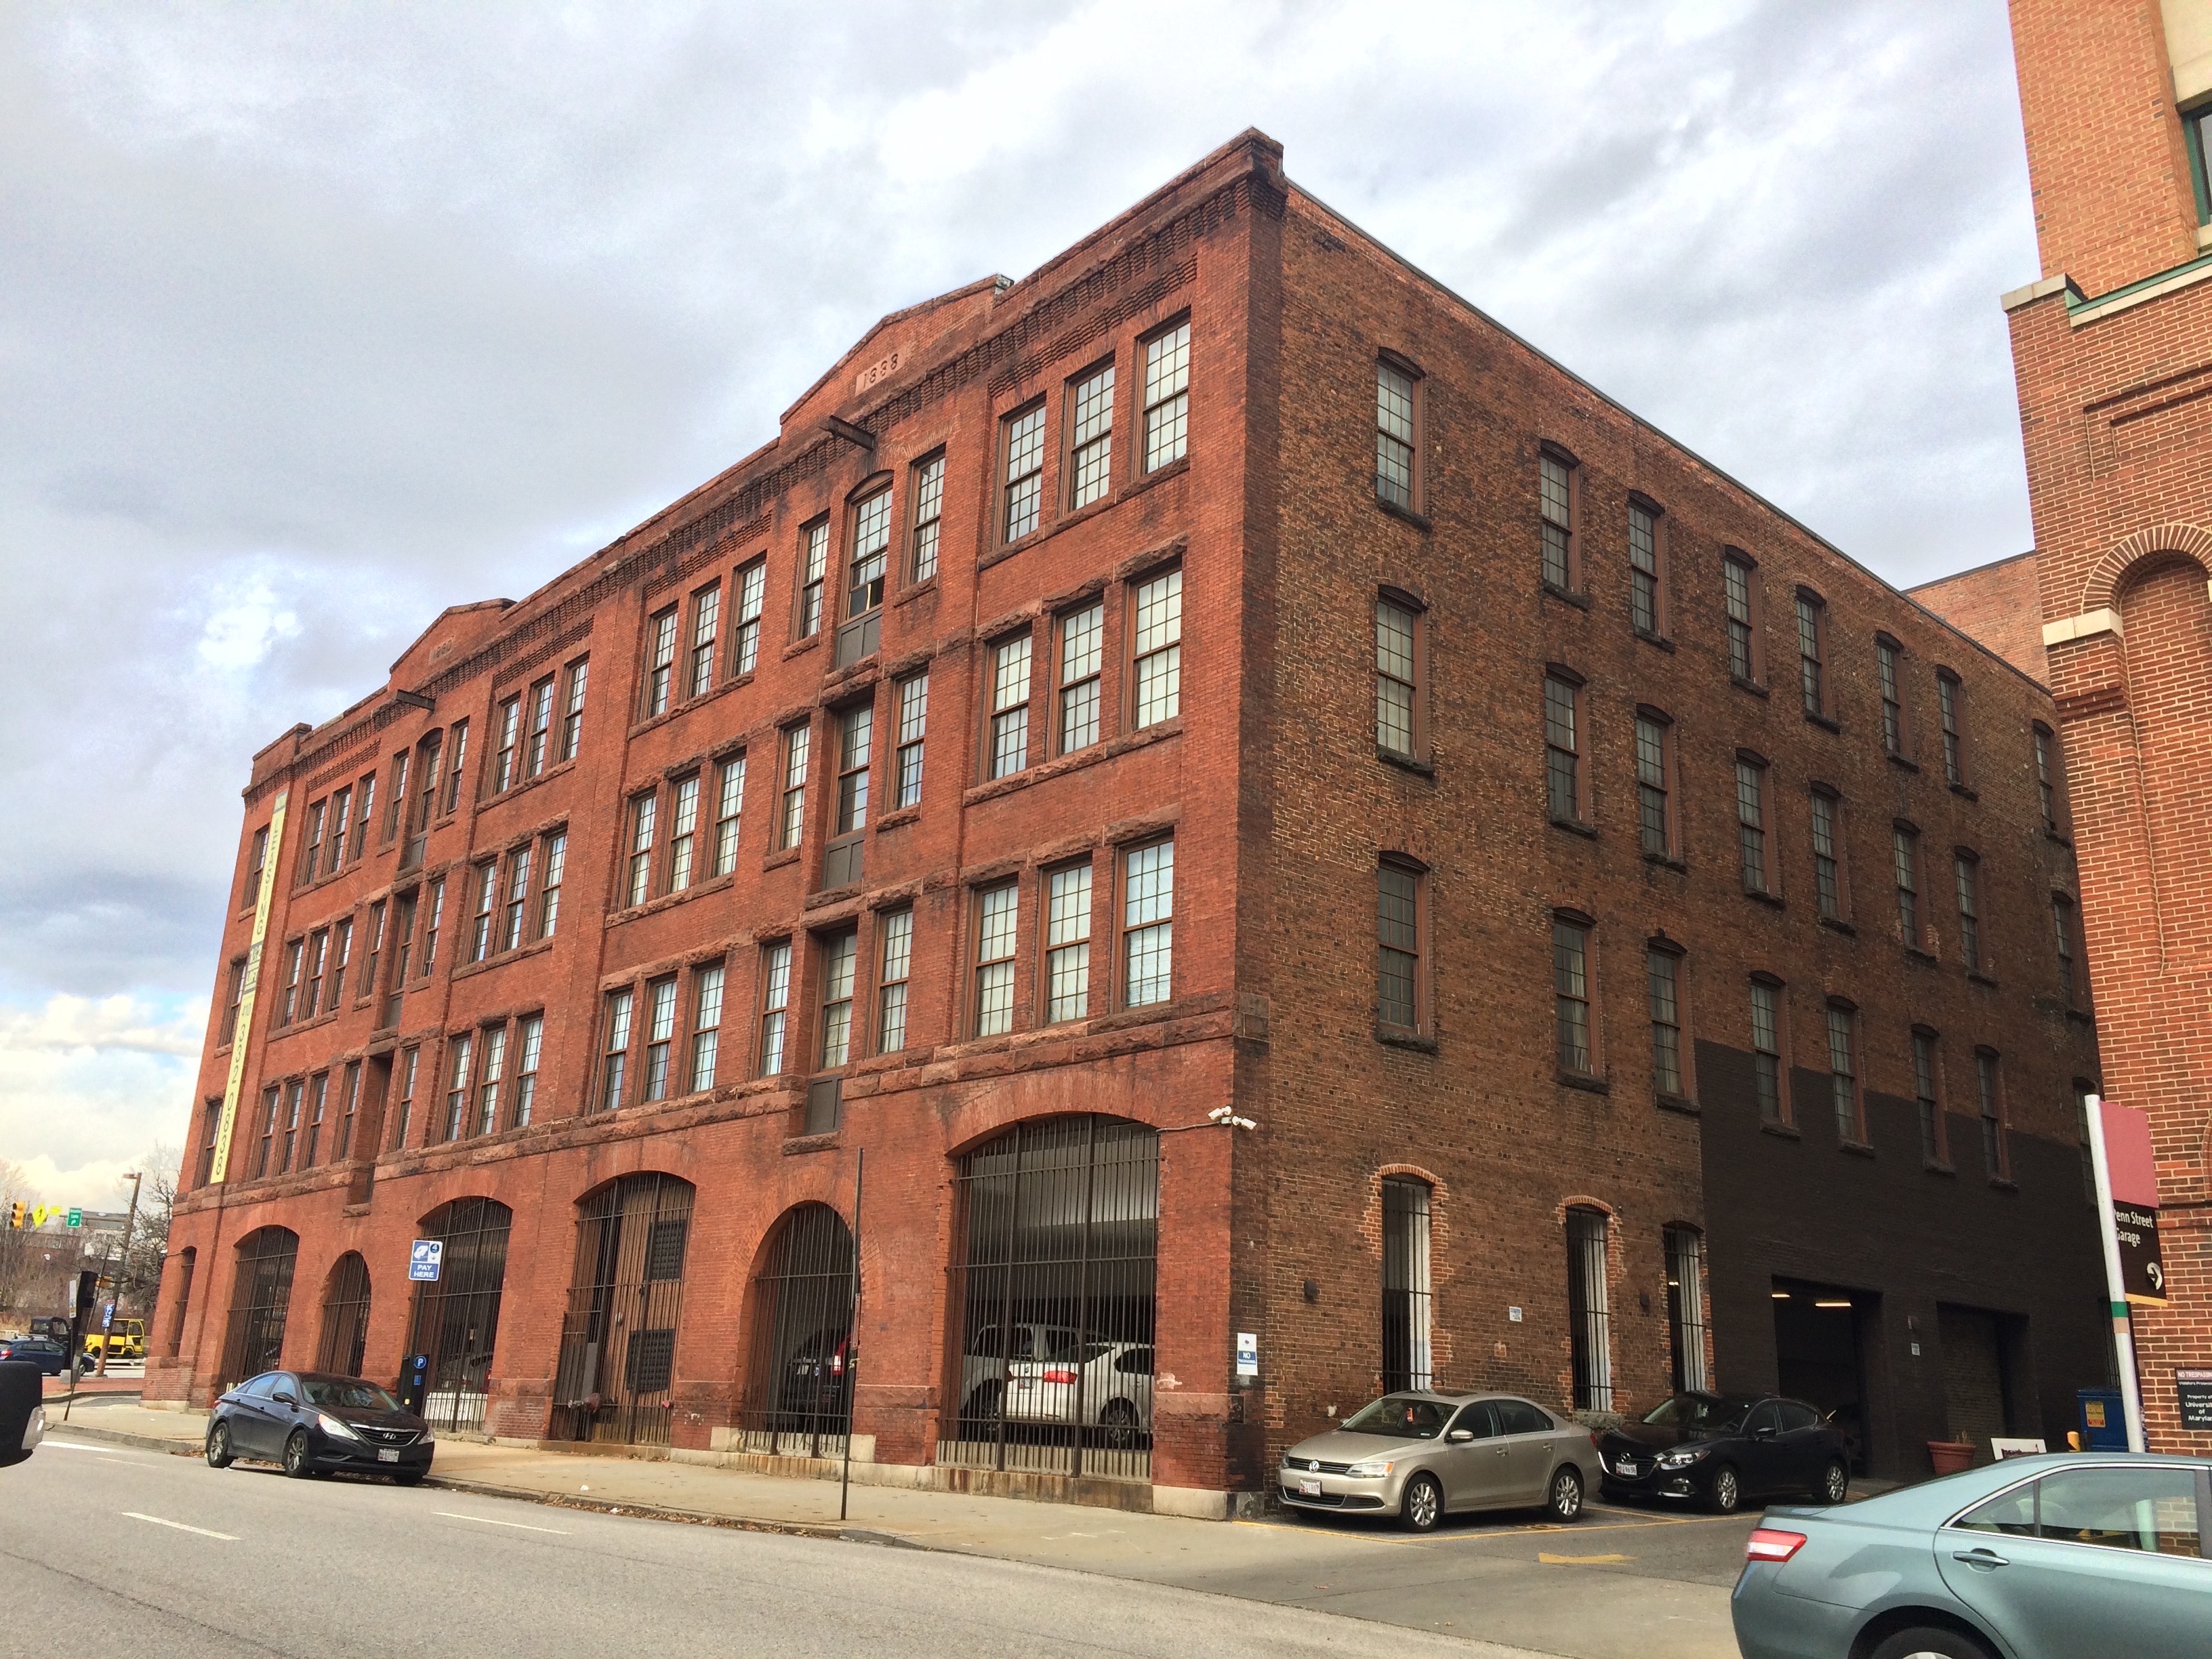 The Sail Cloth Factory Apartments, 121 S. Fremont Avenue, Baltimore, MD 21201, Apartment building, Baltimore, Building, Car, HQ Photo